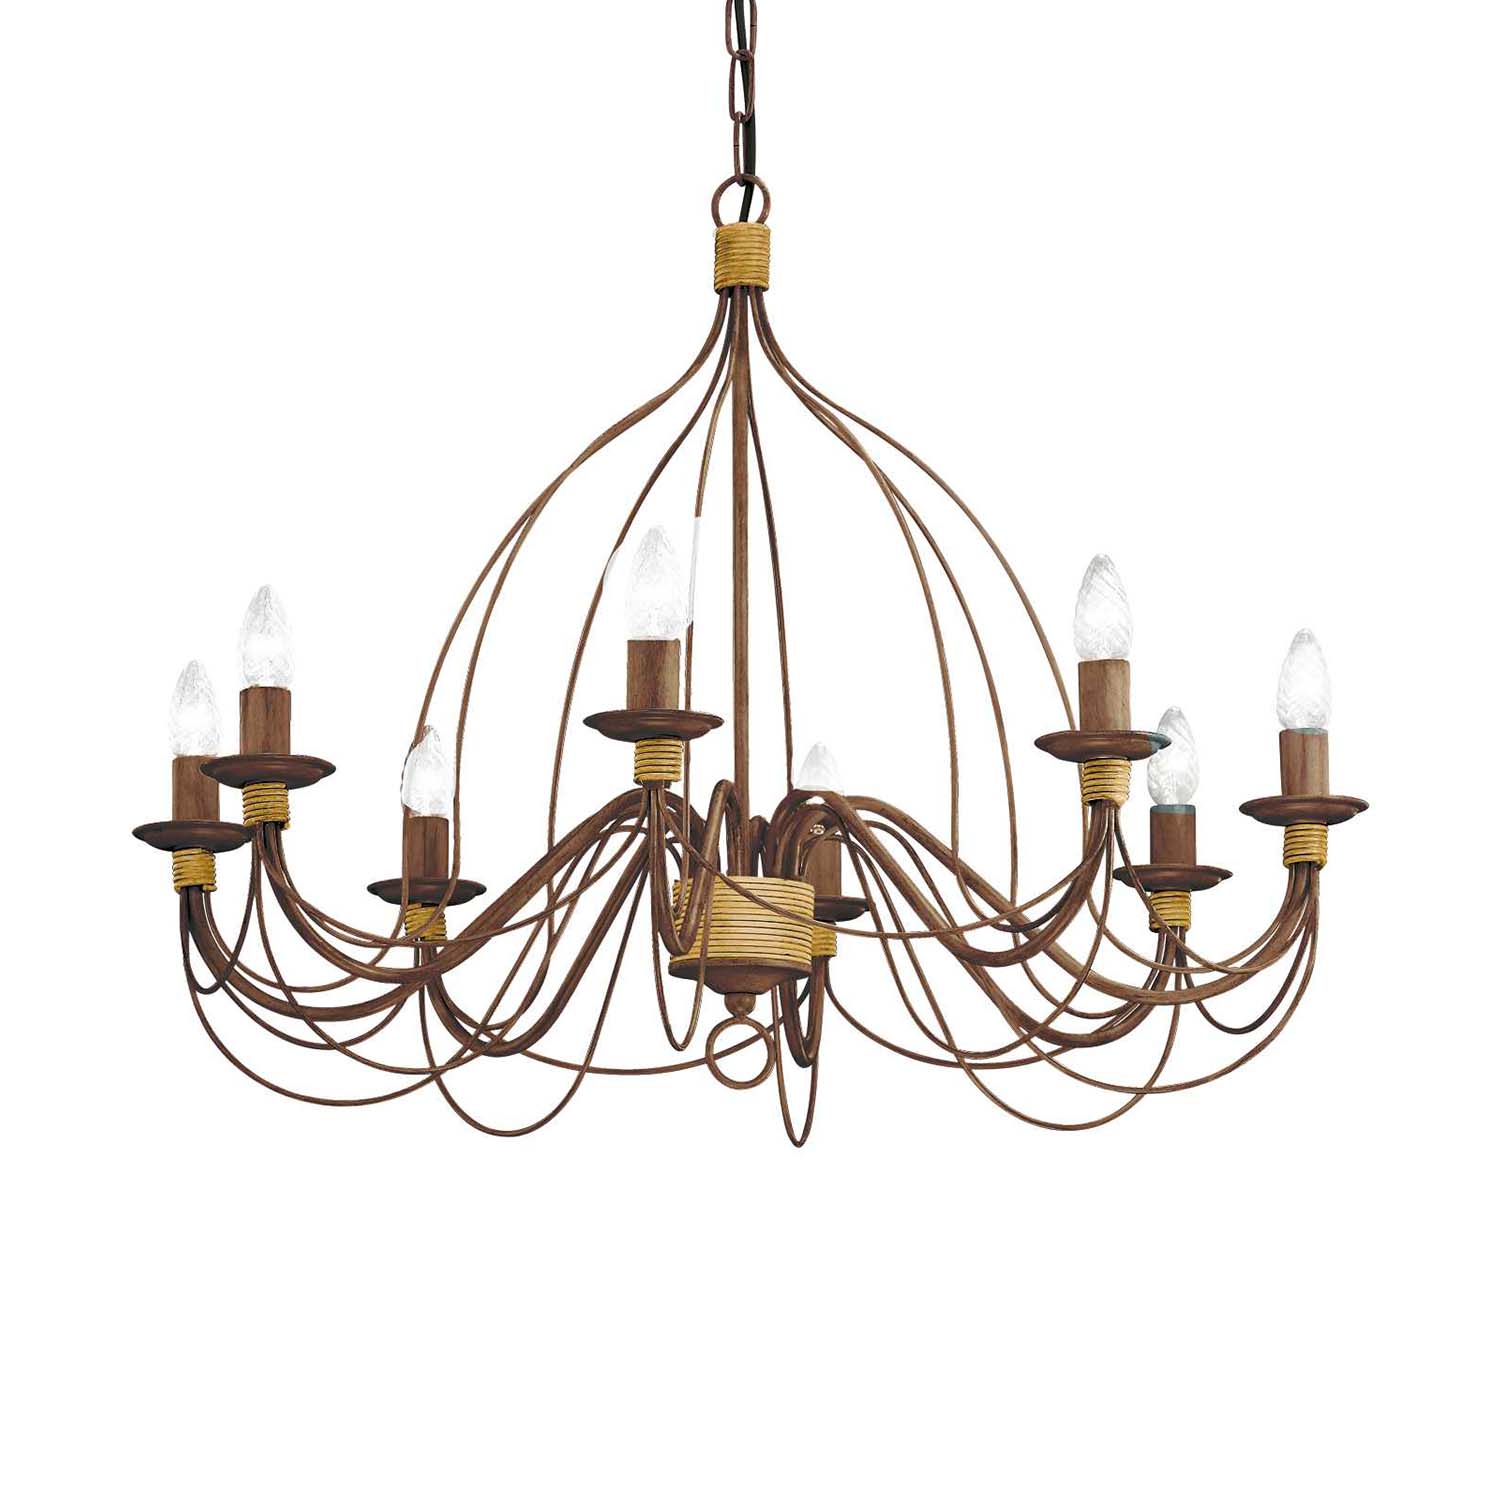 CORTE - Old style bronze chandelier chandelier